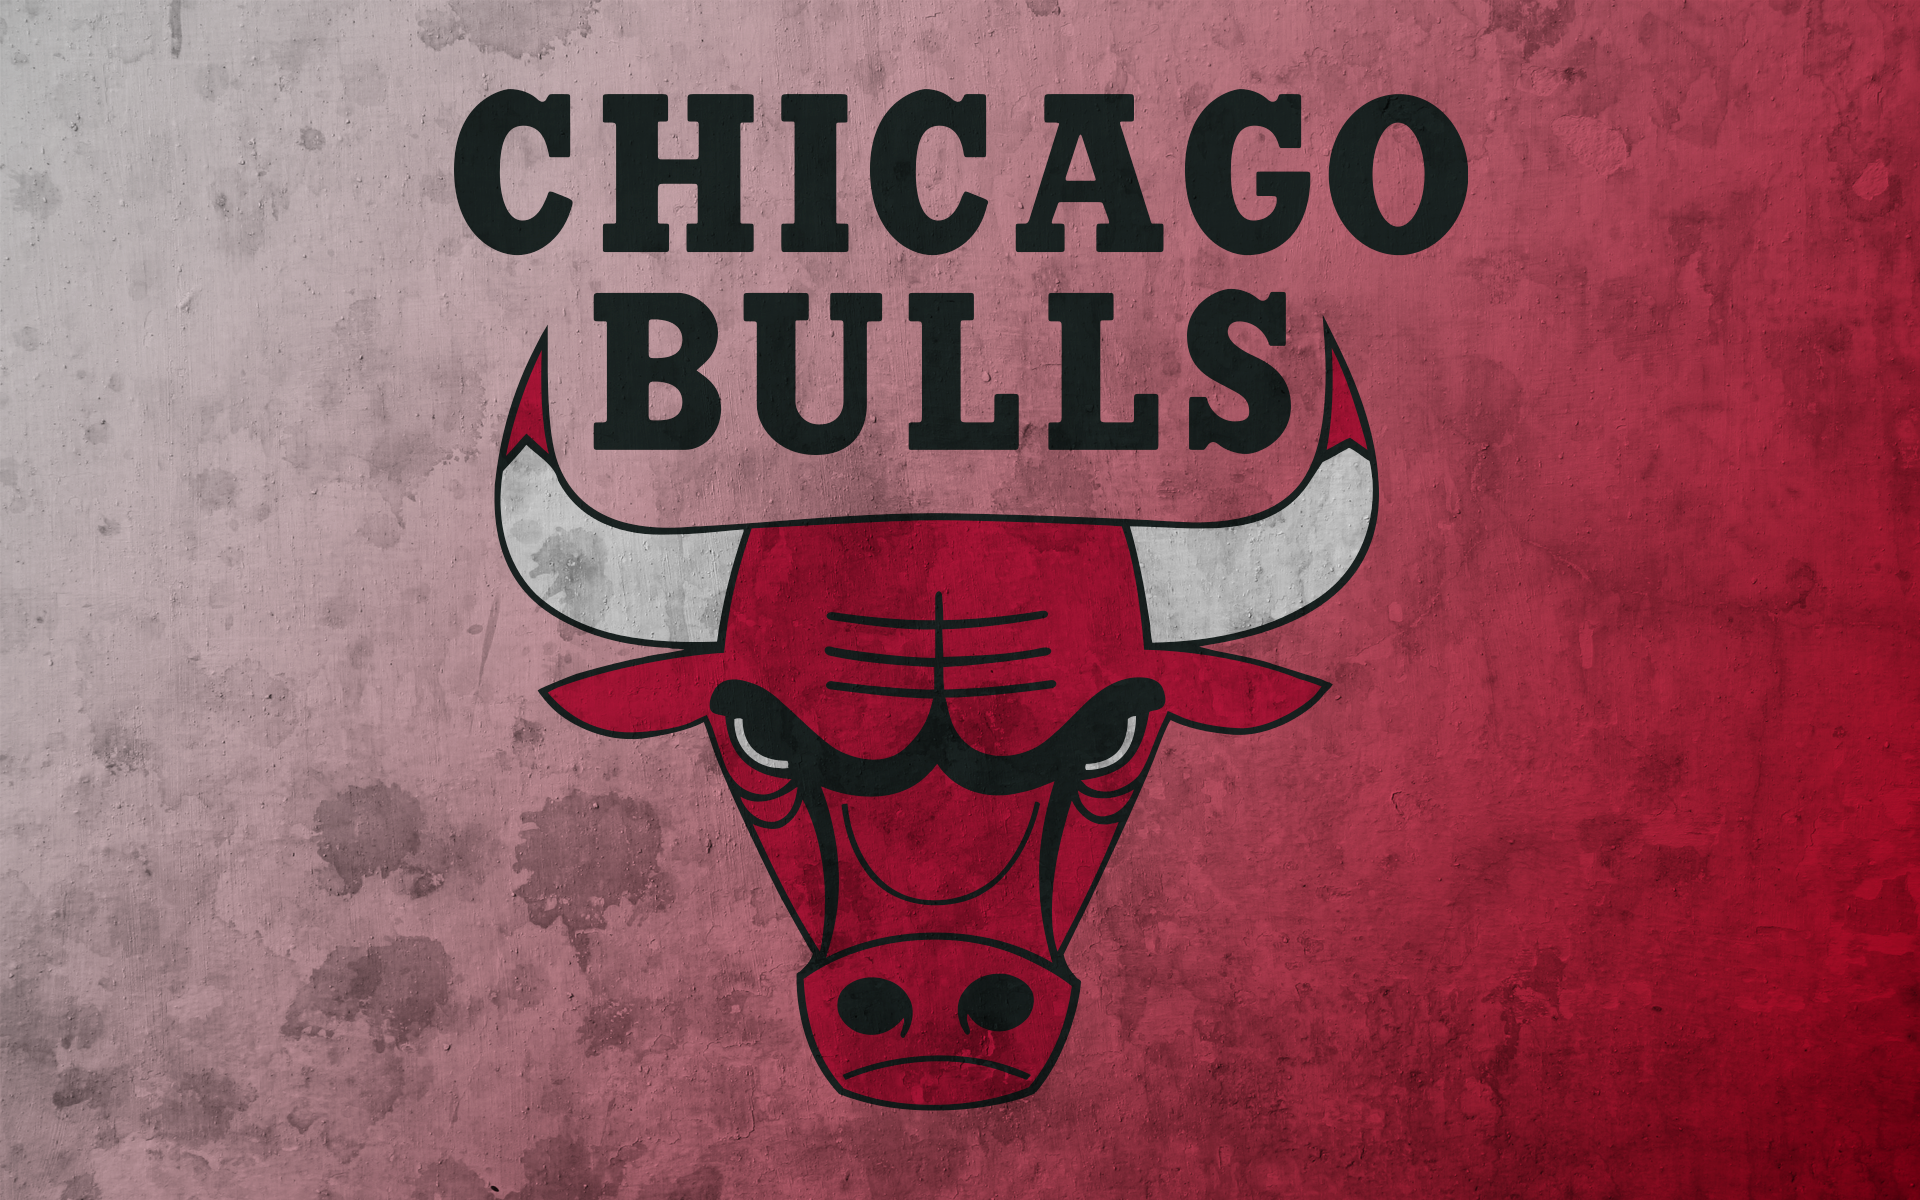 Chicago bulls wallpaper